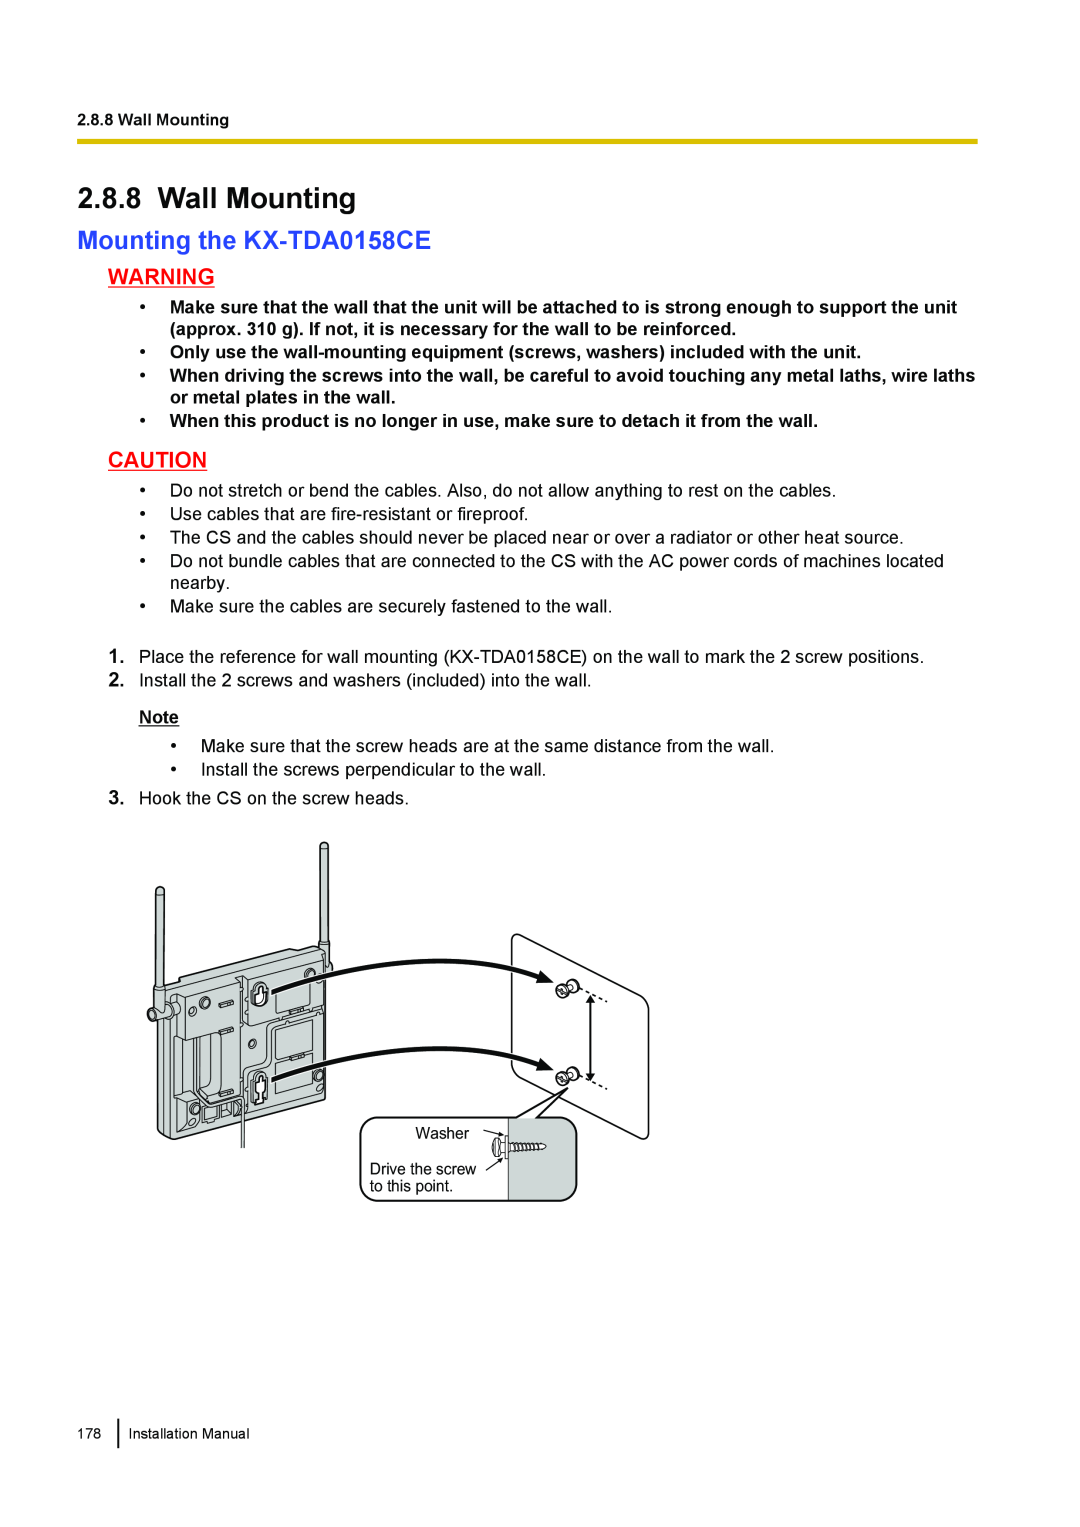 Panasonic KX-TDA100 installation manual Wall Mounting, Mounting the KX-TDA0158CE 